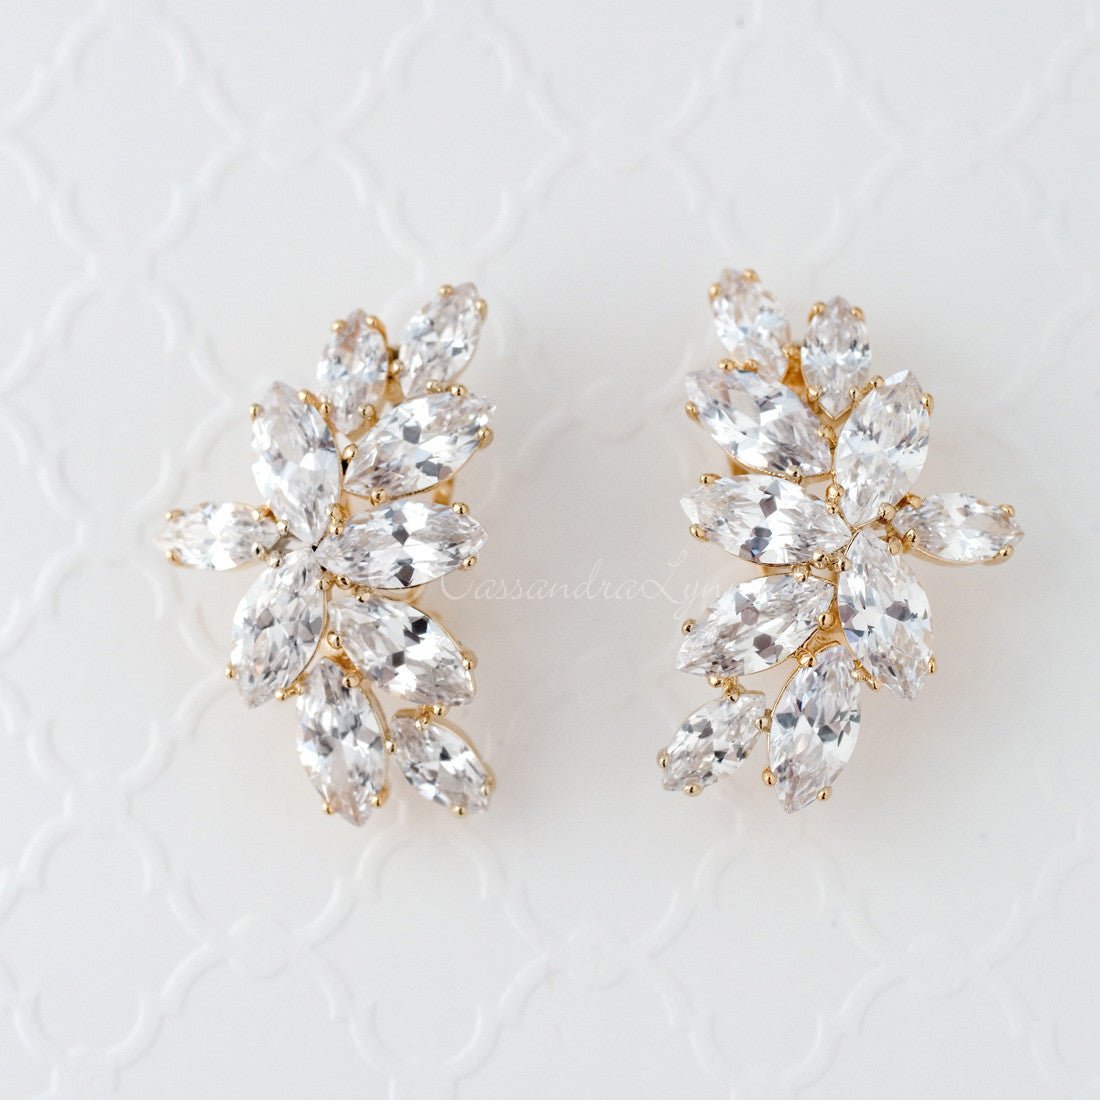 CZ, Crystal and Rhinestone Earrings